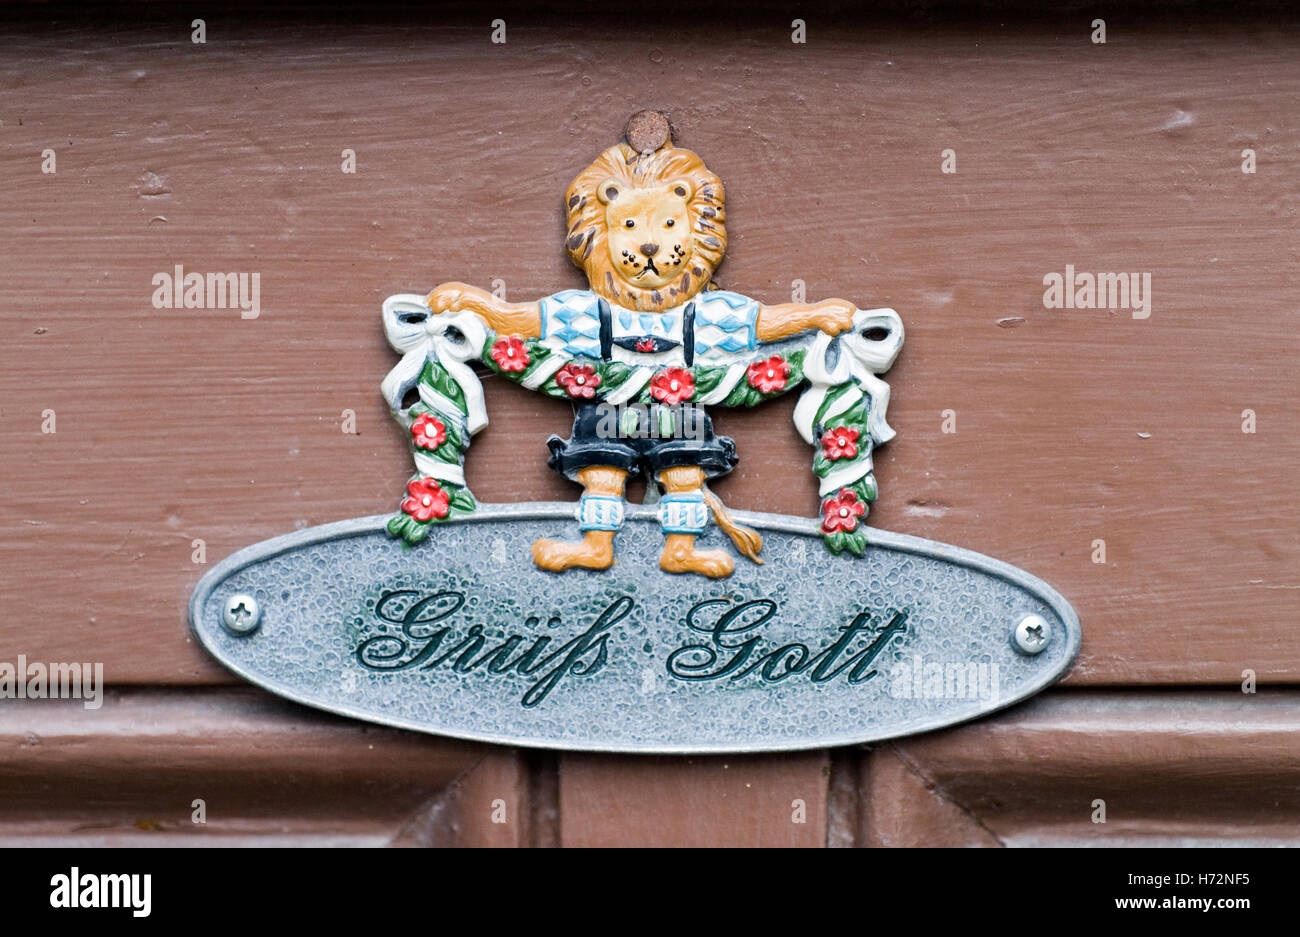 Gruess Gott sign on a door in Rothenburg ob der Tauber, Bavaria, Germany Stock Photo